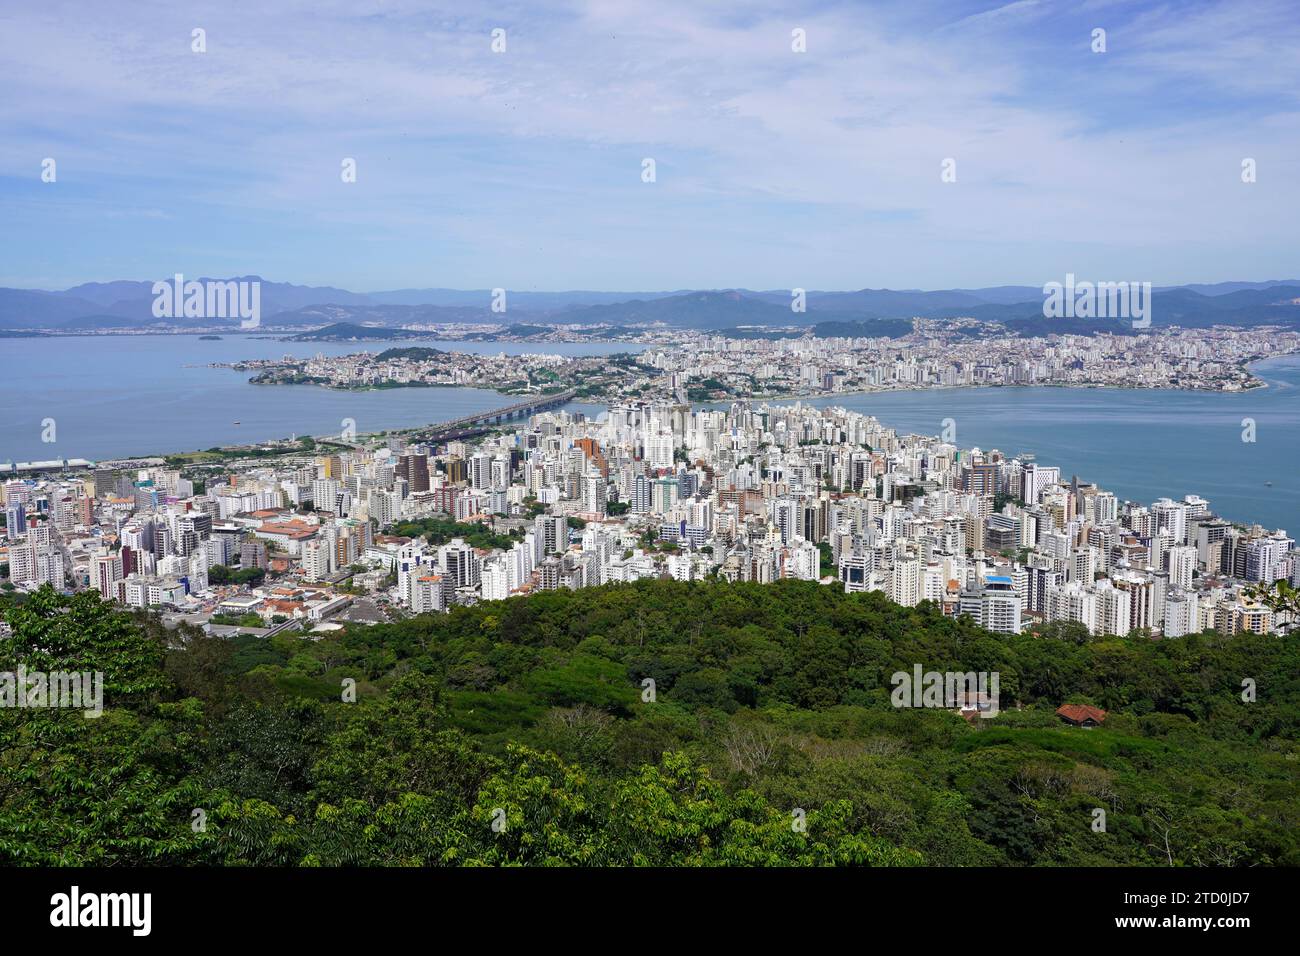 Aerial view of the metropolitan area of Florianopolis, Santa Catarina, Brazil Stock Photo